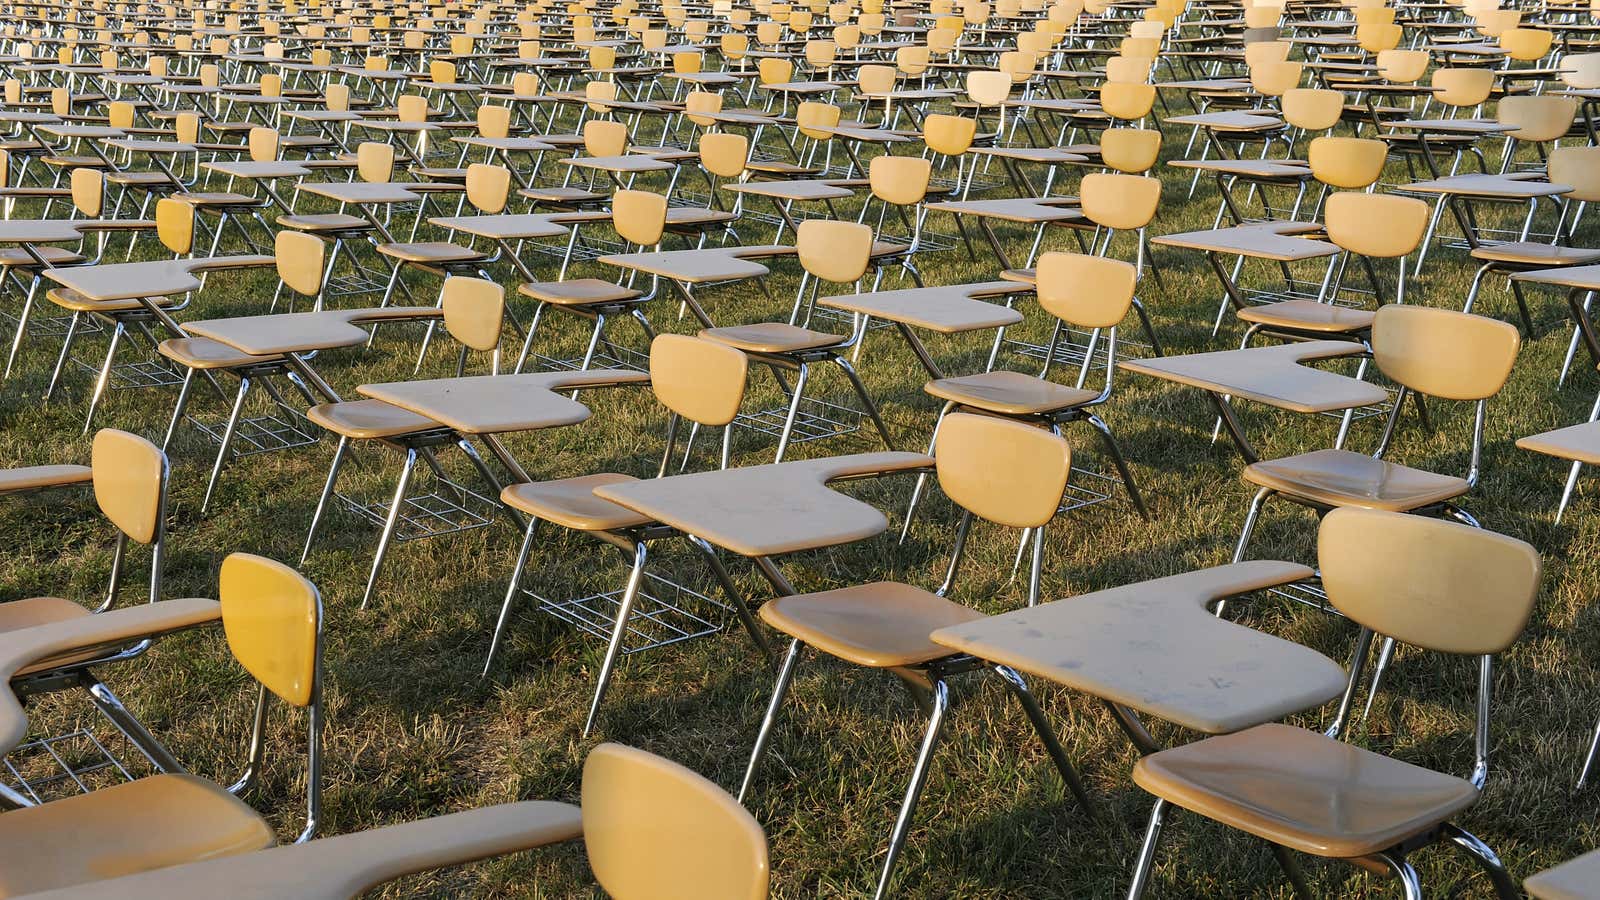 An art installation of 857 empty school desks representing drop-outs